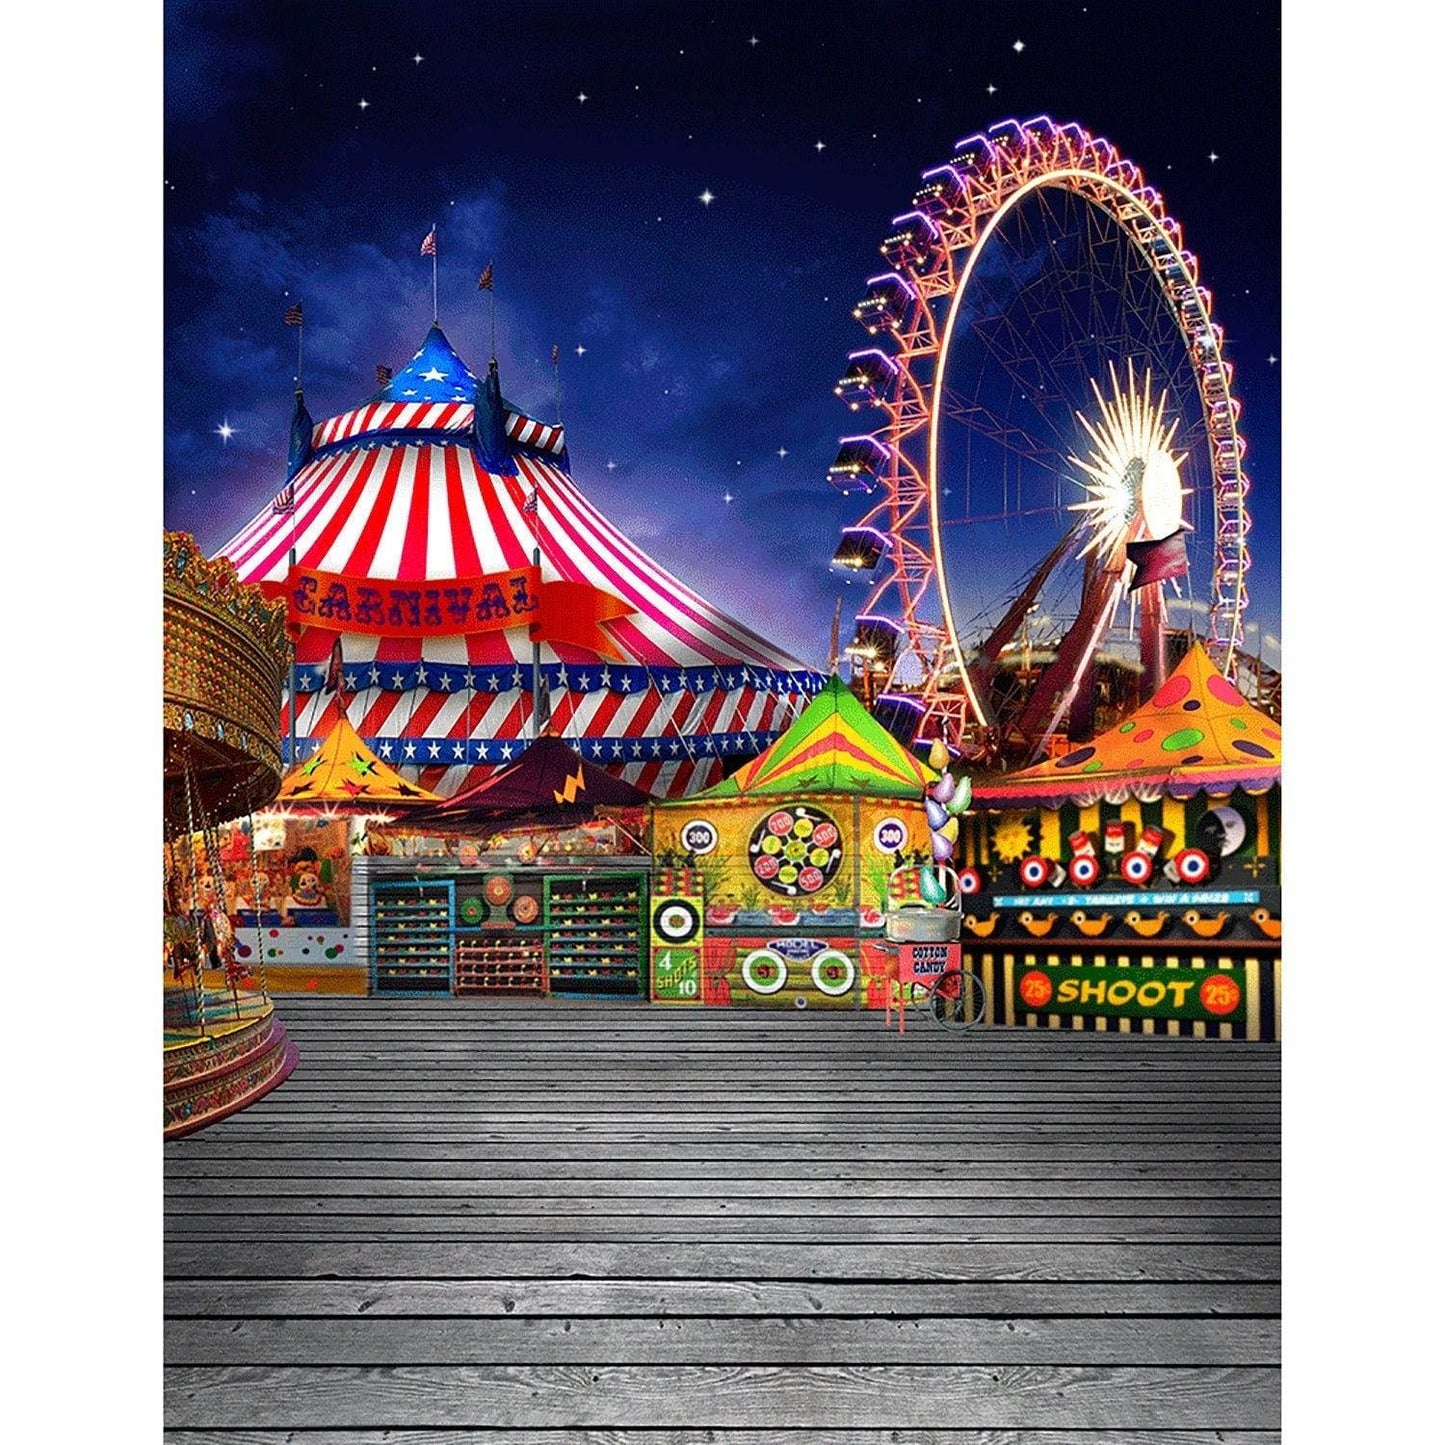 Amusement Park On The Boardwalk Photo Backdrop - Pro 8  x 10  